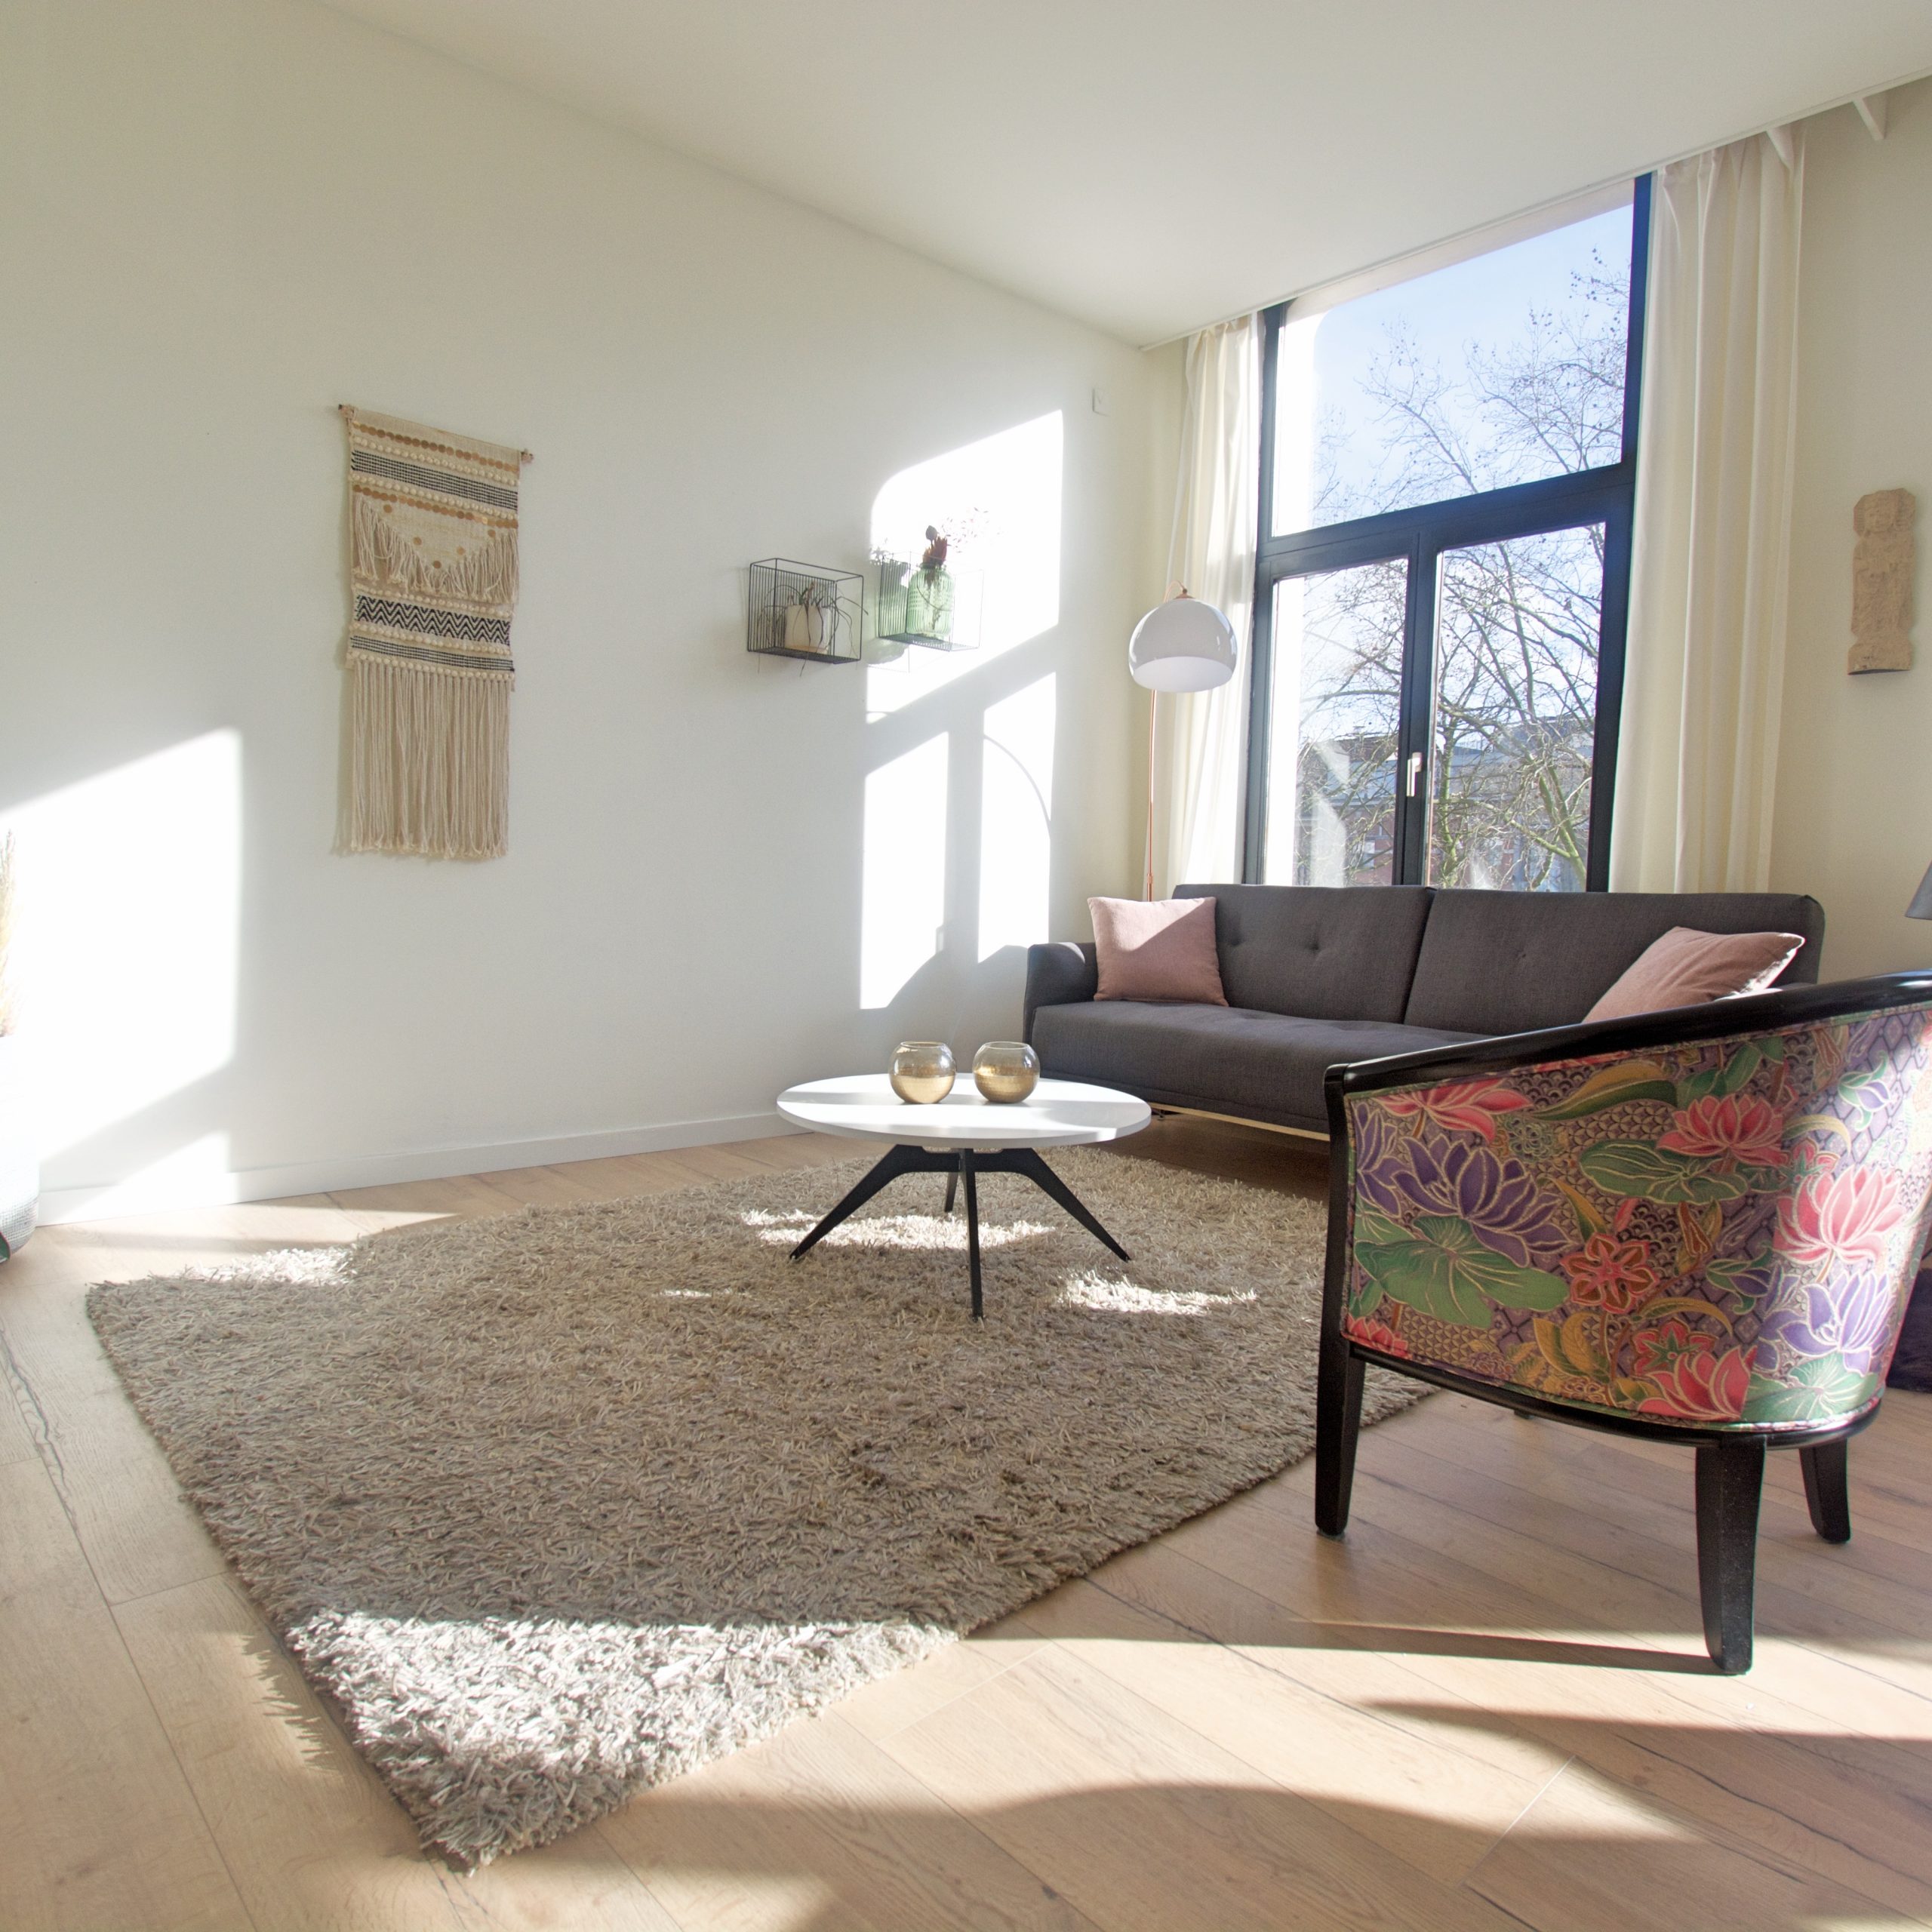 Leeuwenrui 2 - Luxury flat in Antwerp for rent